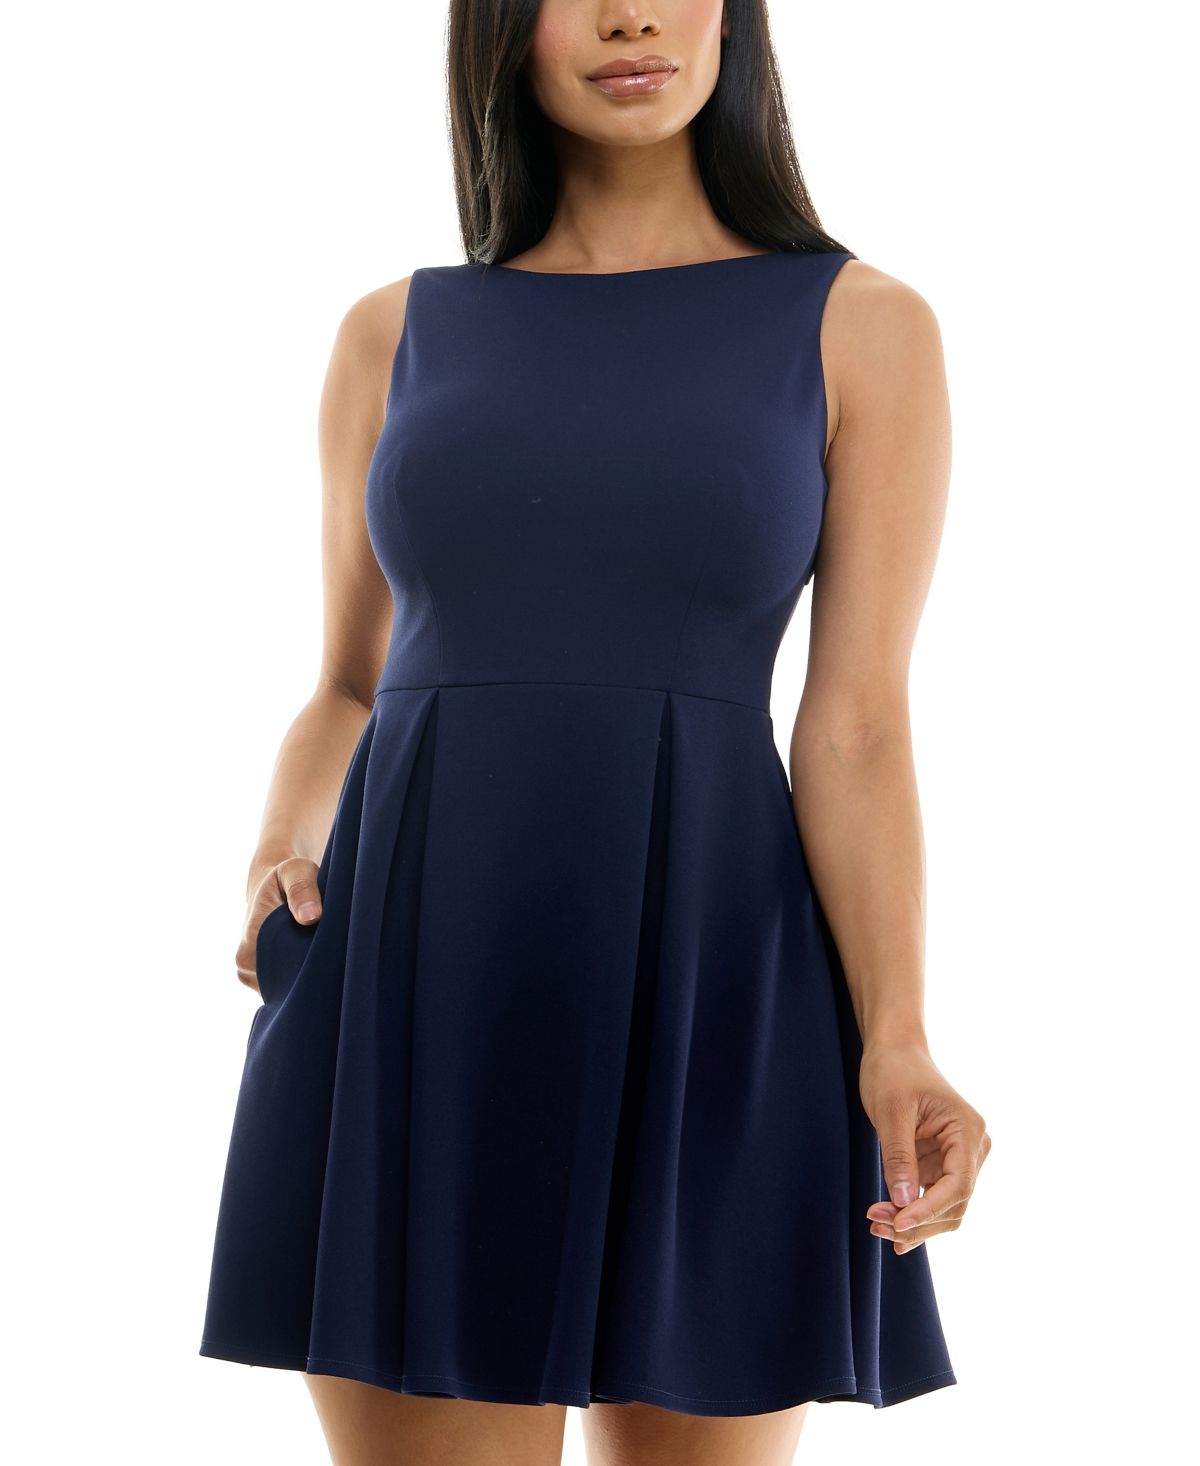 B. Smart Women's Sz 6 Sleeveless Pleated A-Line Dress Blue